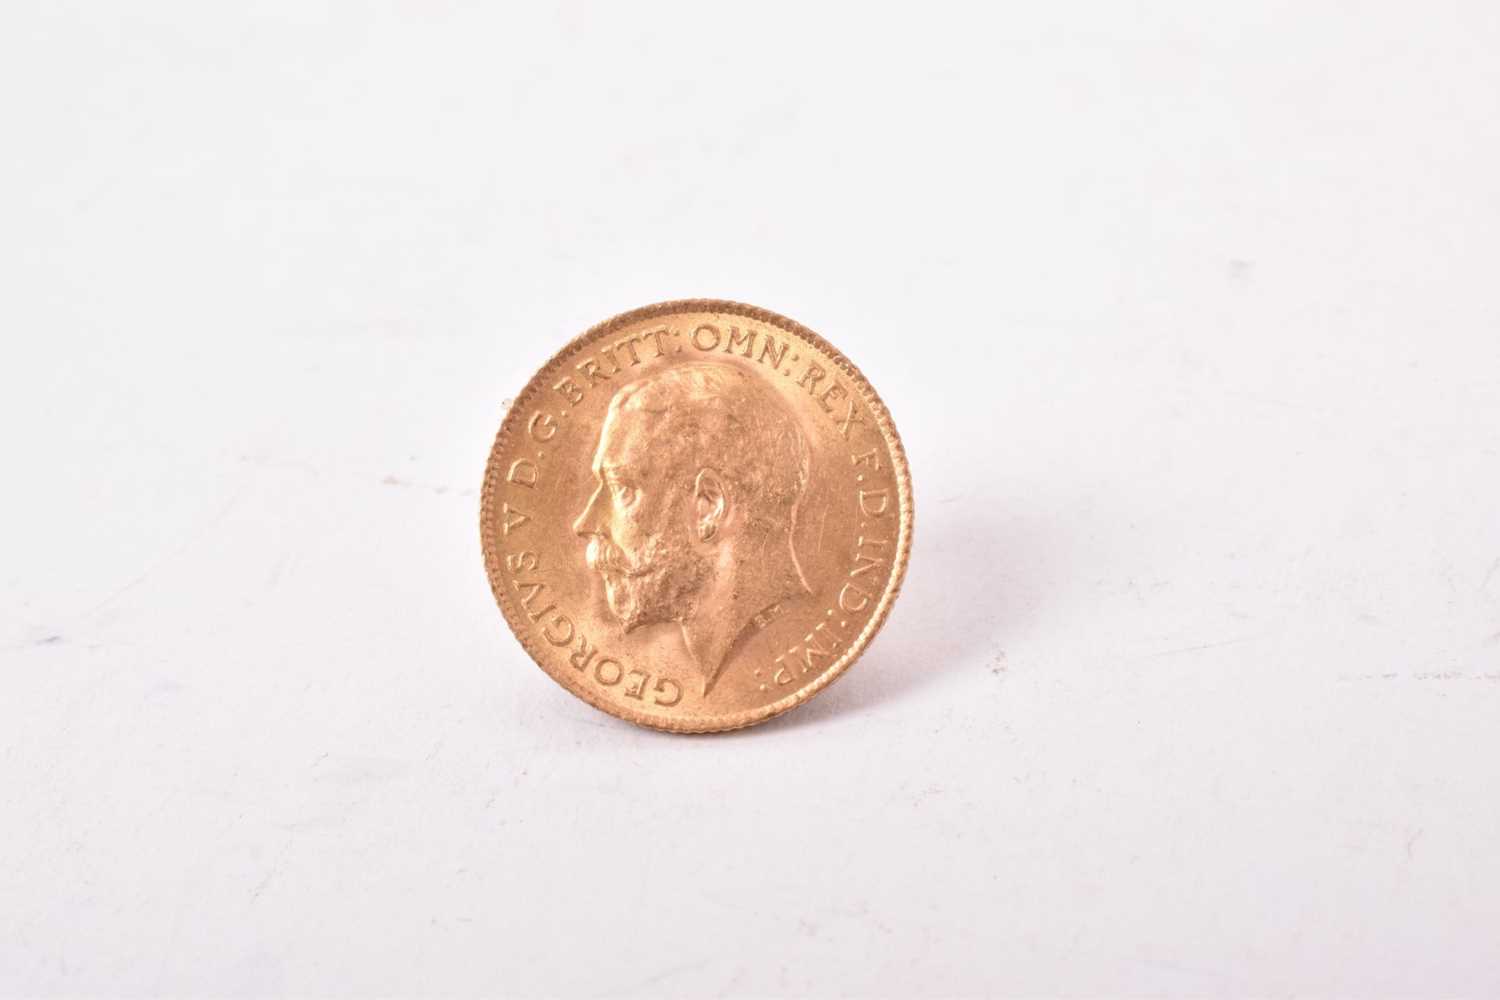 G.B. - Gold Half Sovereign George V 1914 GEF (1 coin) - Image 2 of 2